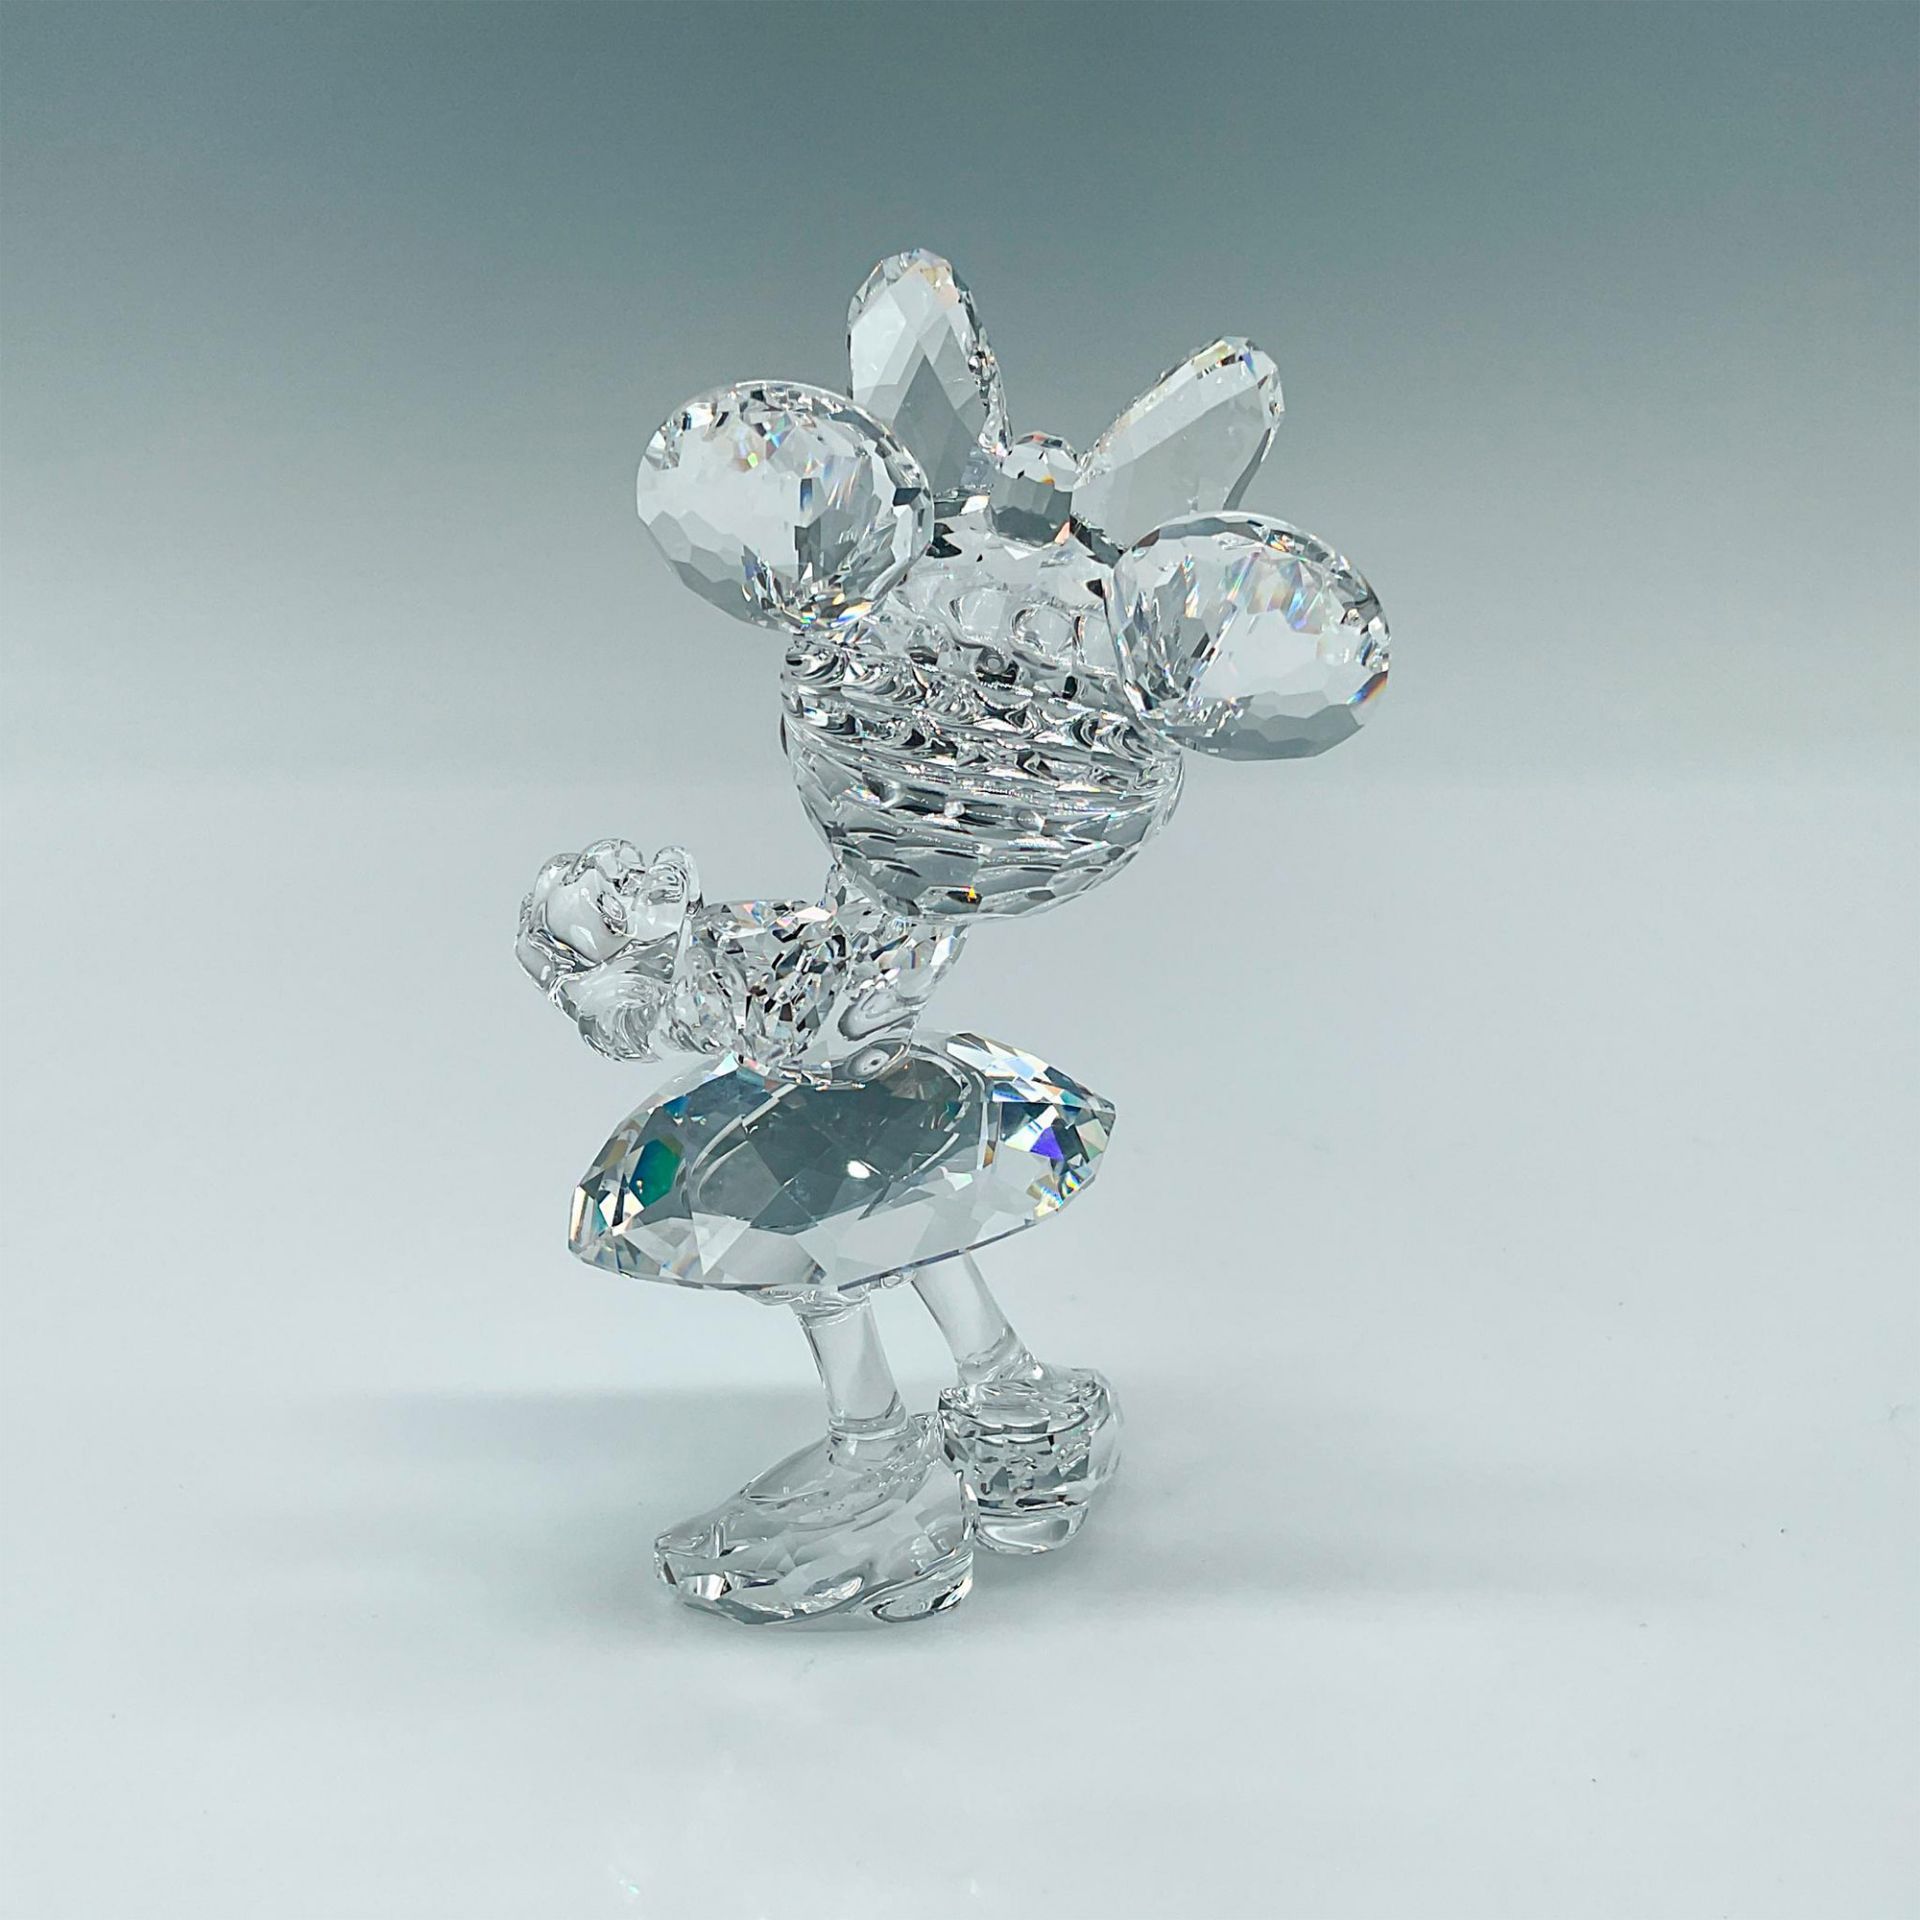 Swarovski Disney Crystal Figurine, Minnie Mouse - Image 2 of 4